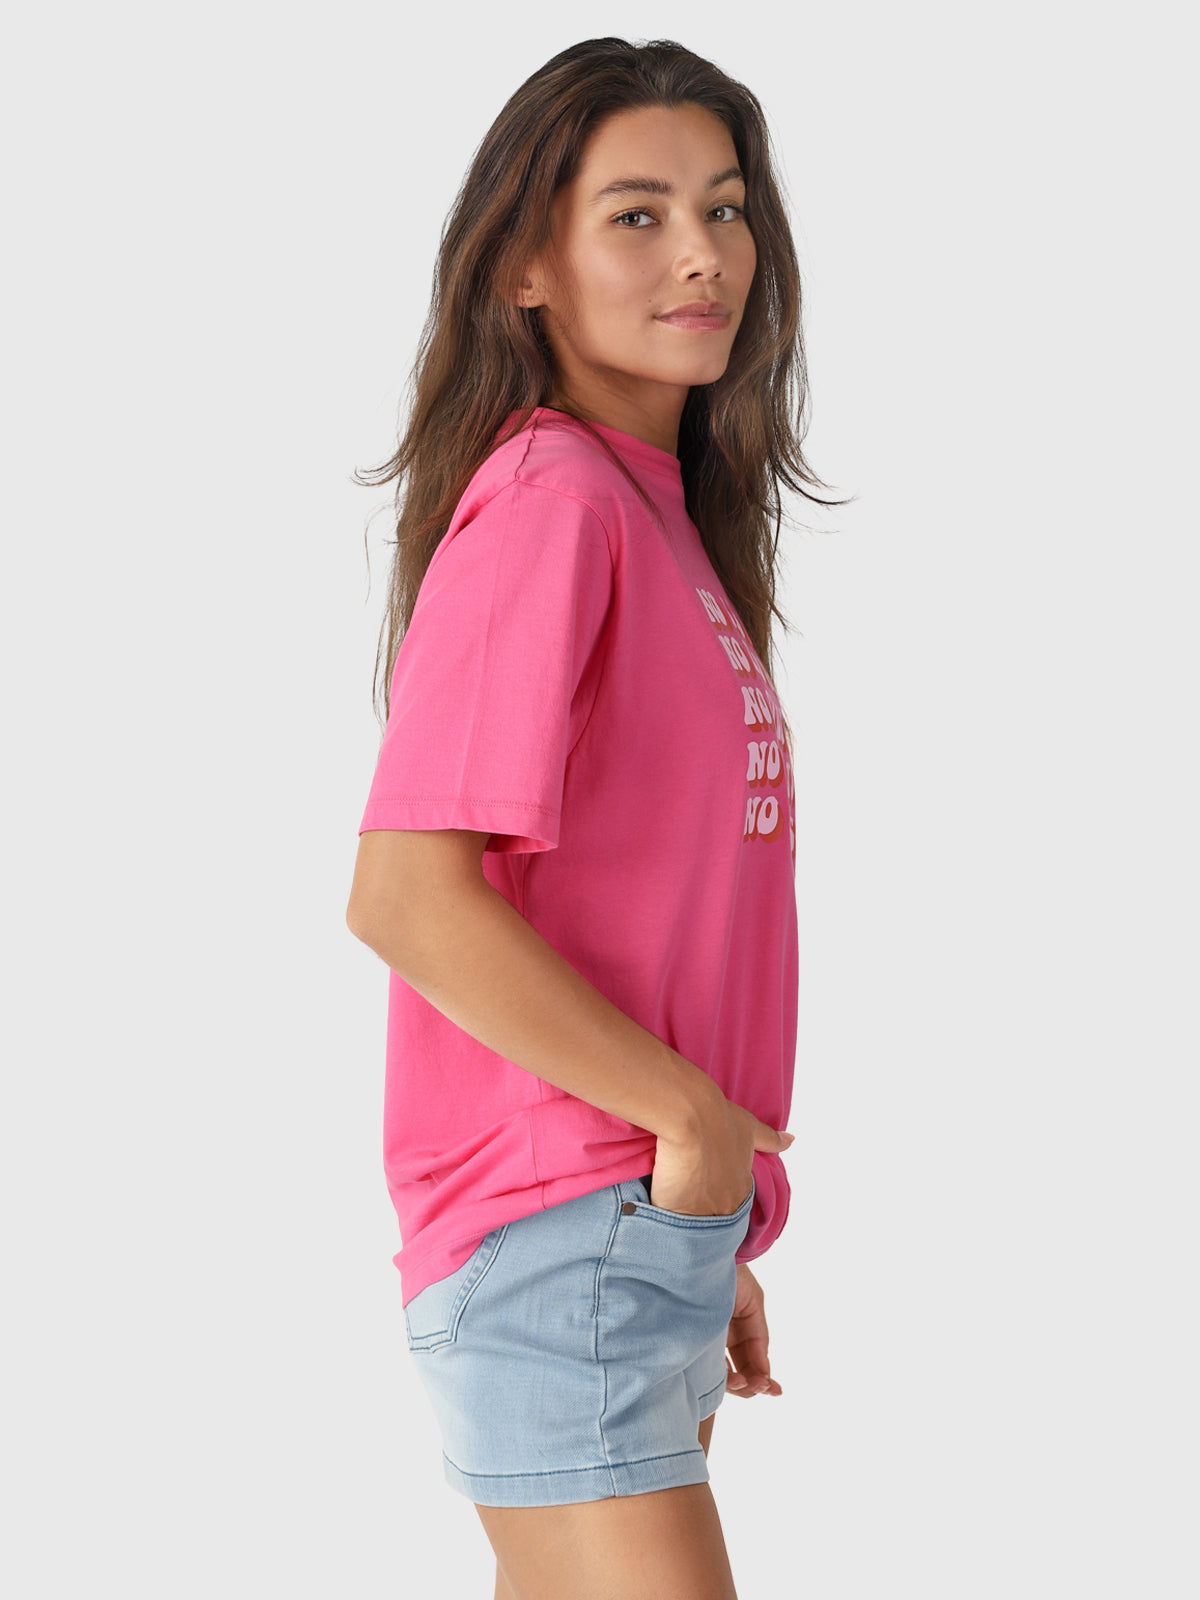 Imani-R Damen T-Shirt | Rosa